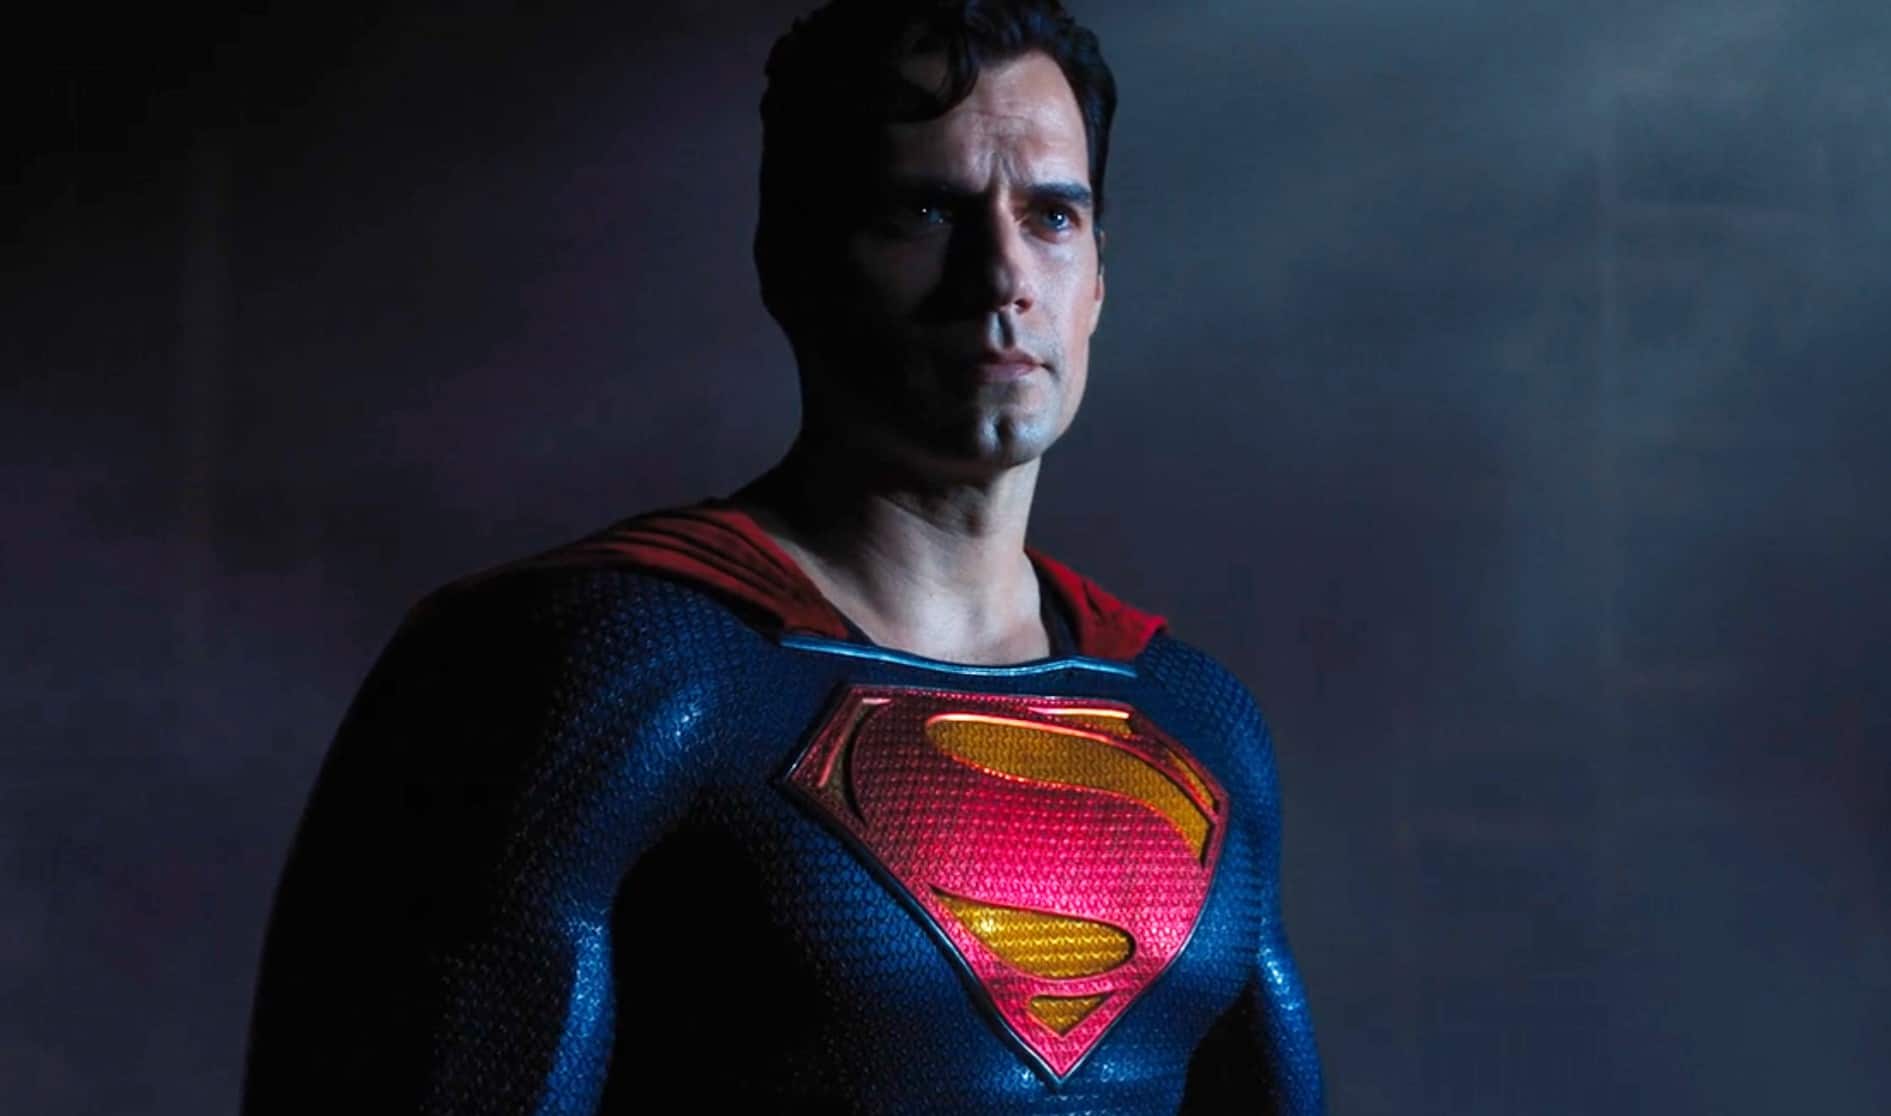 Henry Cavill Superman Making Final Appearance?